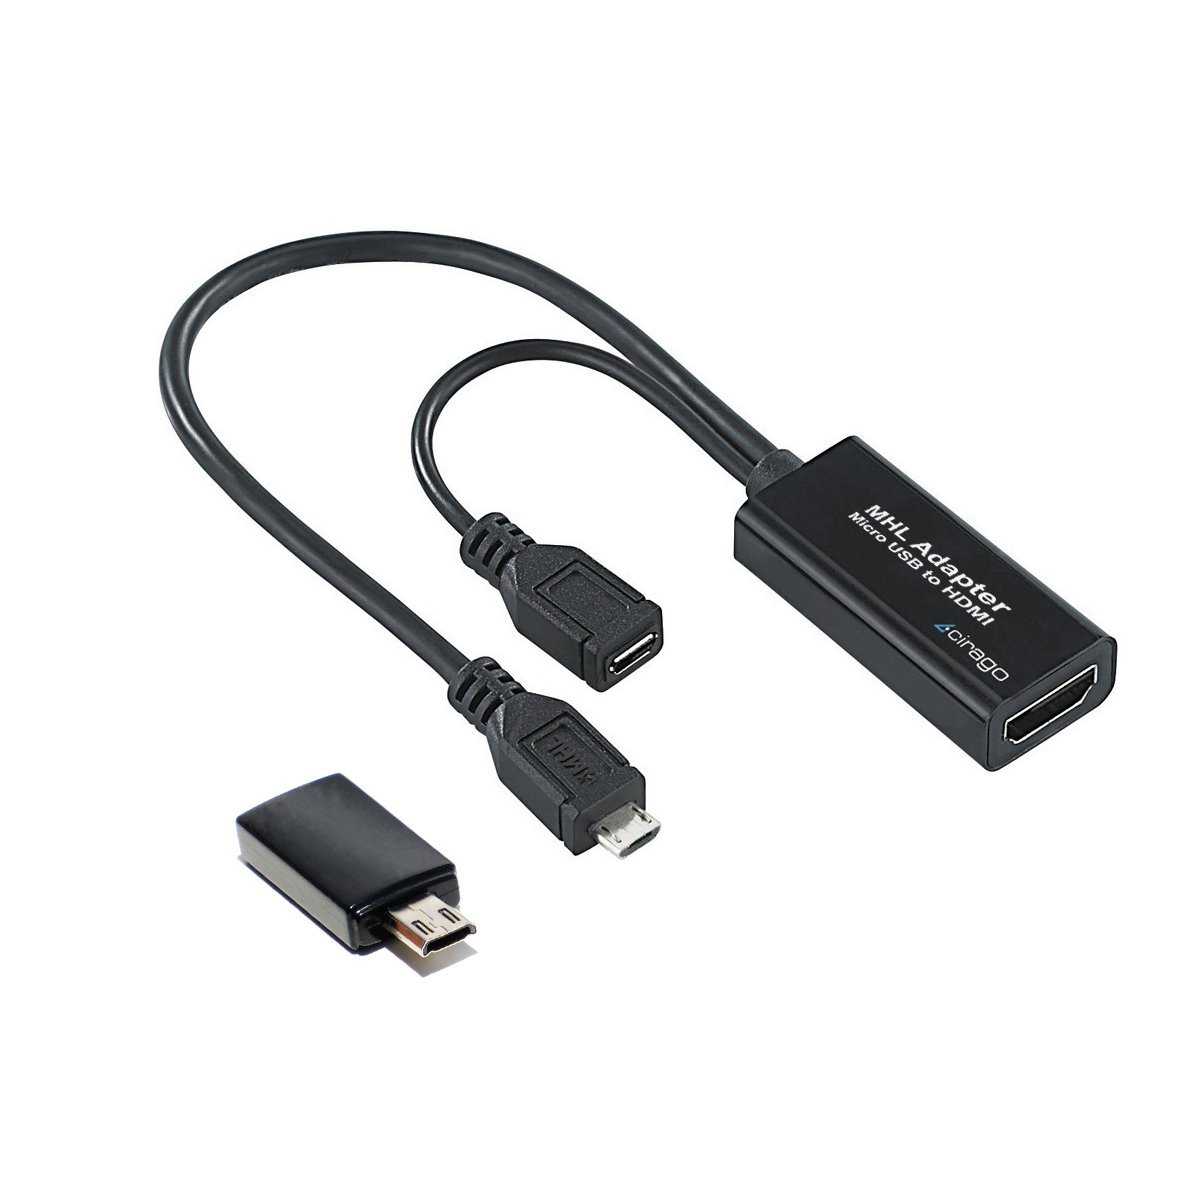 Соединение через usb. Кабель USB-HDMI (подключить смартфон к телевизору). Блютуз адаптер для телевизора самсунг. Переходник с юсб на HDMI для телевизора. HDMI вай фай переходник.